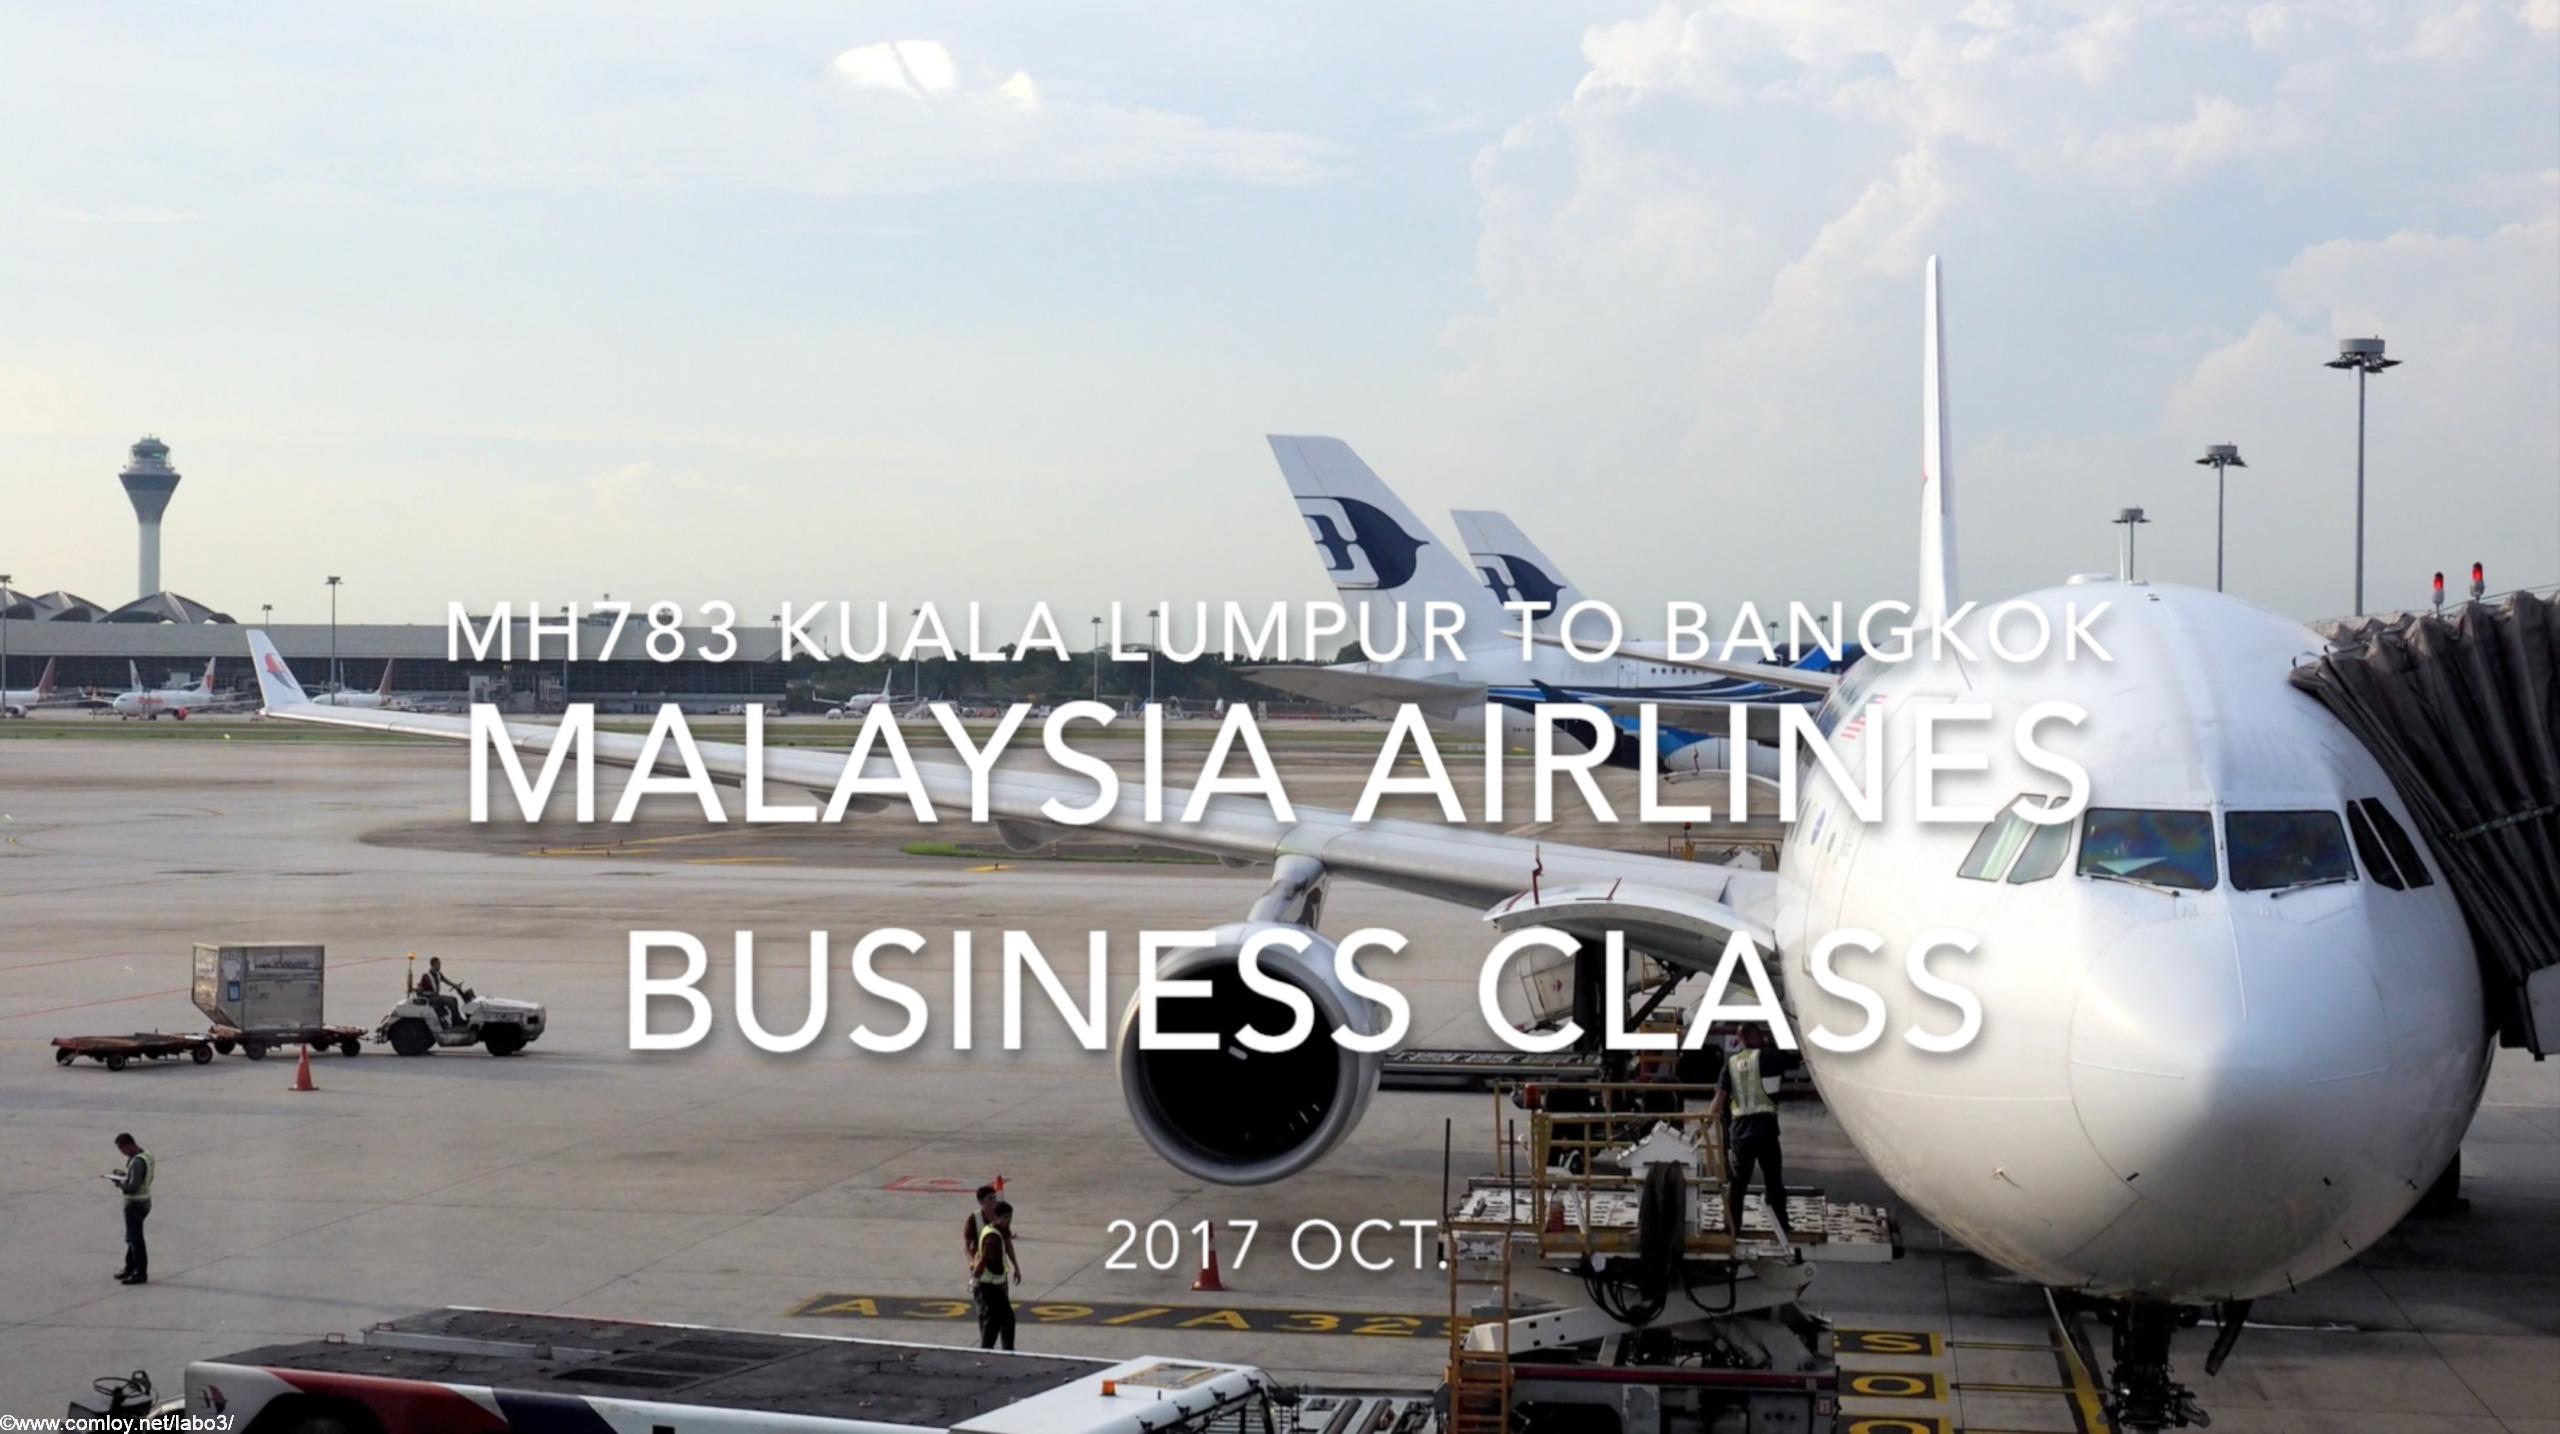 【Flight Report】Malaysia Airlines Business Class MH780 Kuala Lumpur to Bangkok 2017・10 マレーシア航空ビジネスクラス搭乗記 1